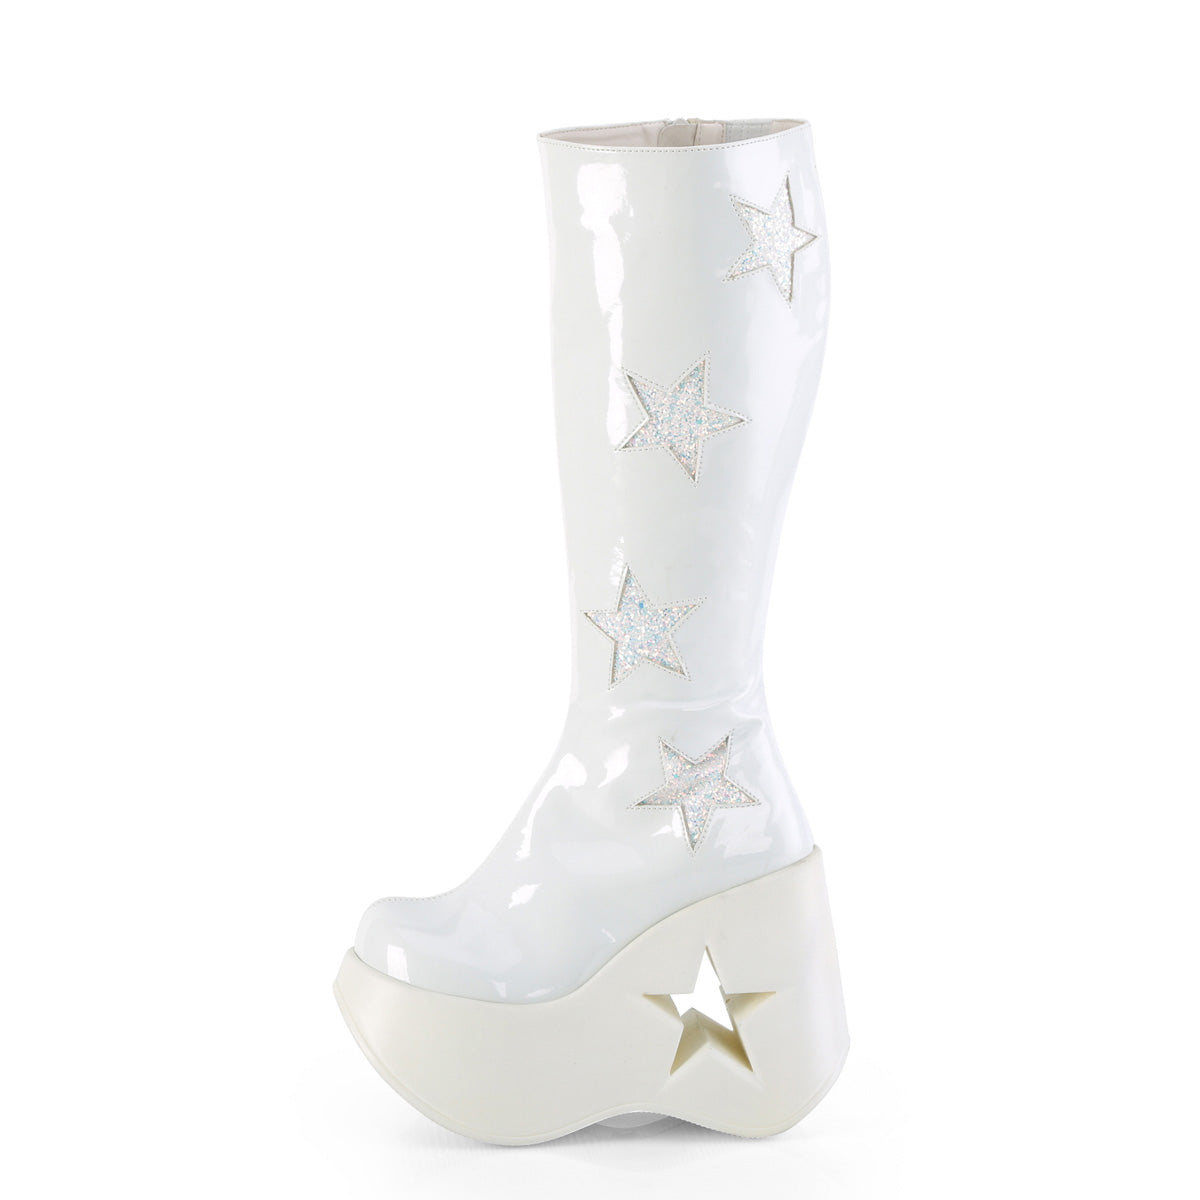 DYNAMITE-218 Demonia White Patent-White Multi Glitter Women's Mid-Calf & Knee High Boots [Demonia Cult Alternative Footwear]